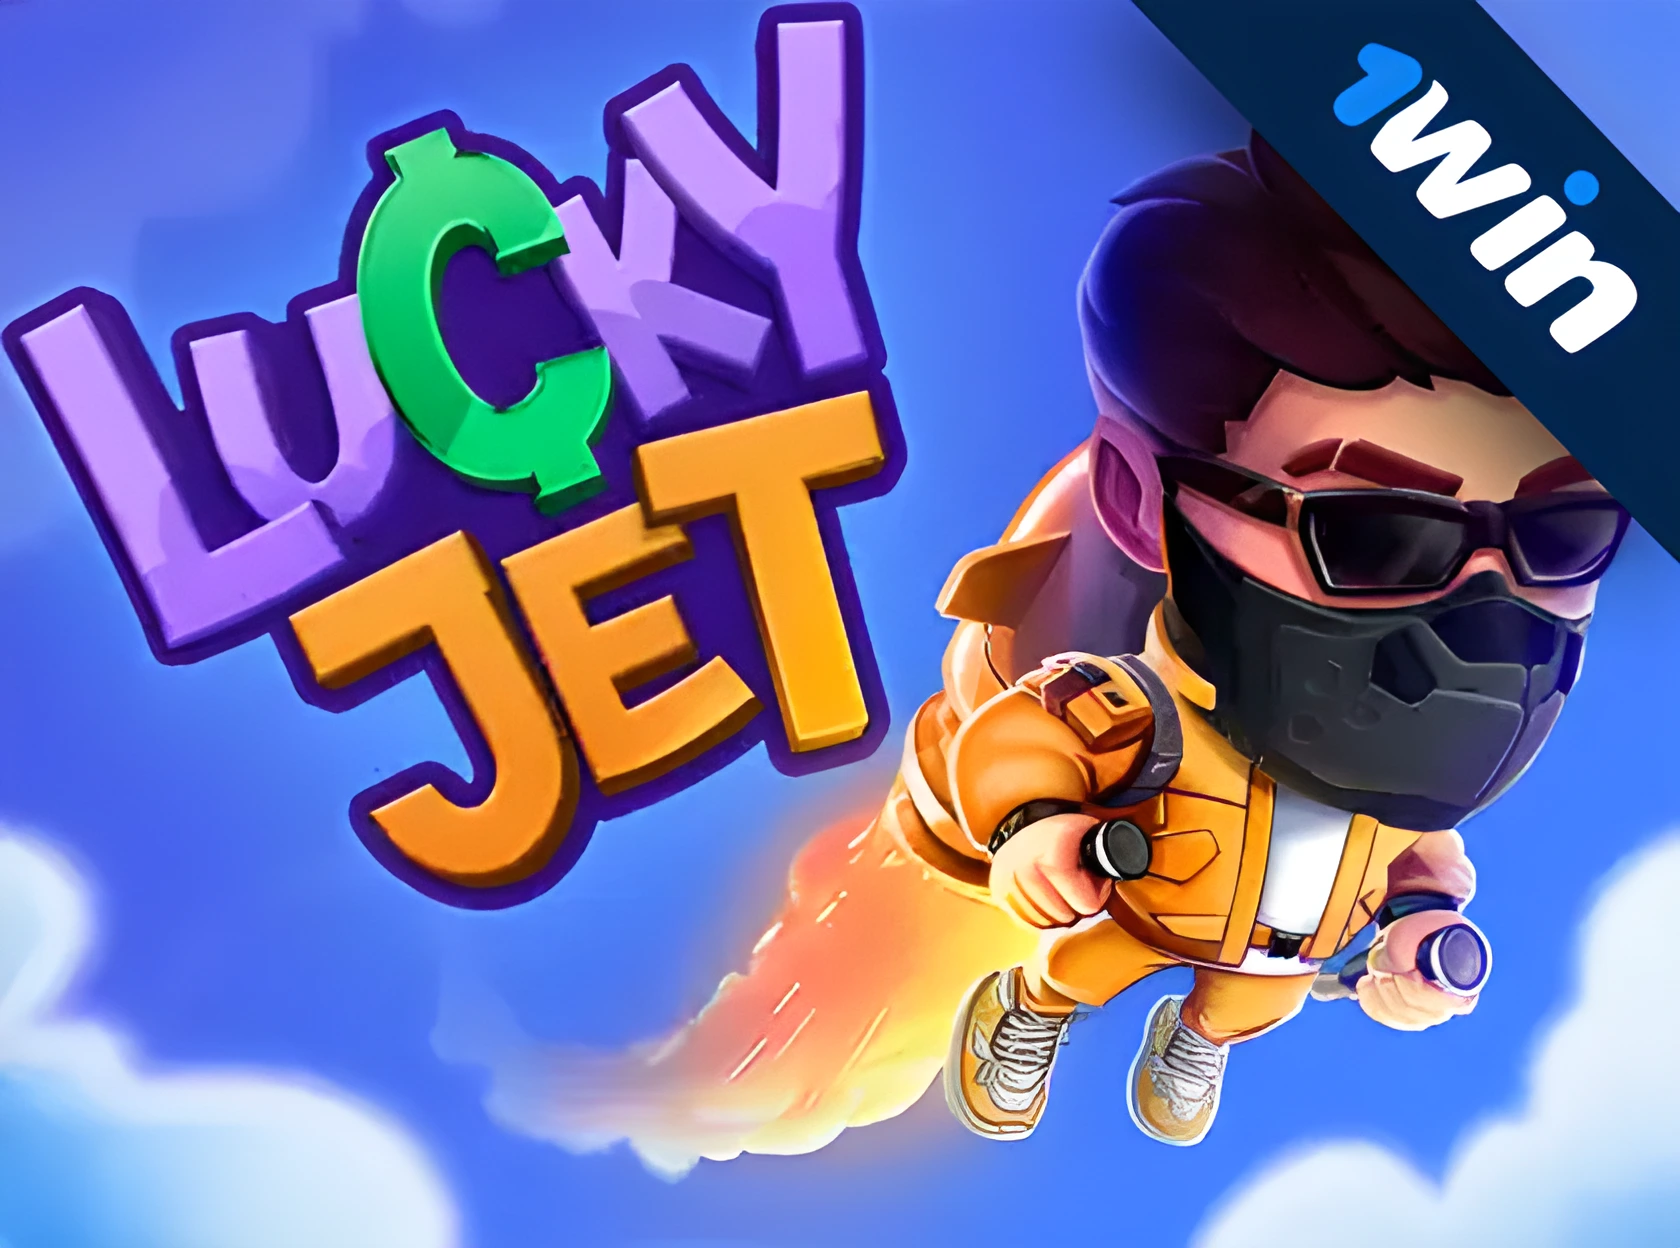 Lucky Jet 1win рдХреИрд╕реАрдиреЛ рд╕реЗ рдСрдирд▓рд╛рдЗрди рд╕реНрд▓реЙрдЯ